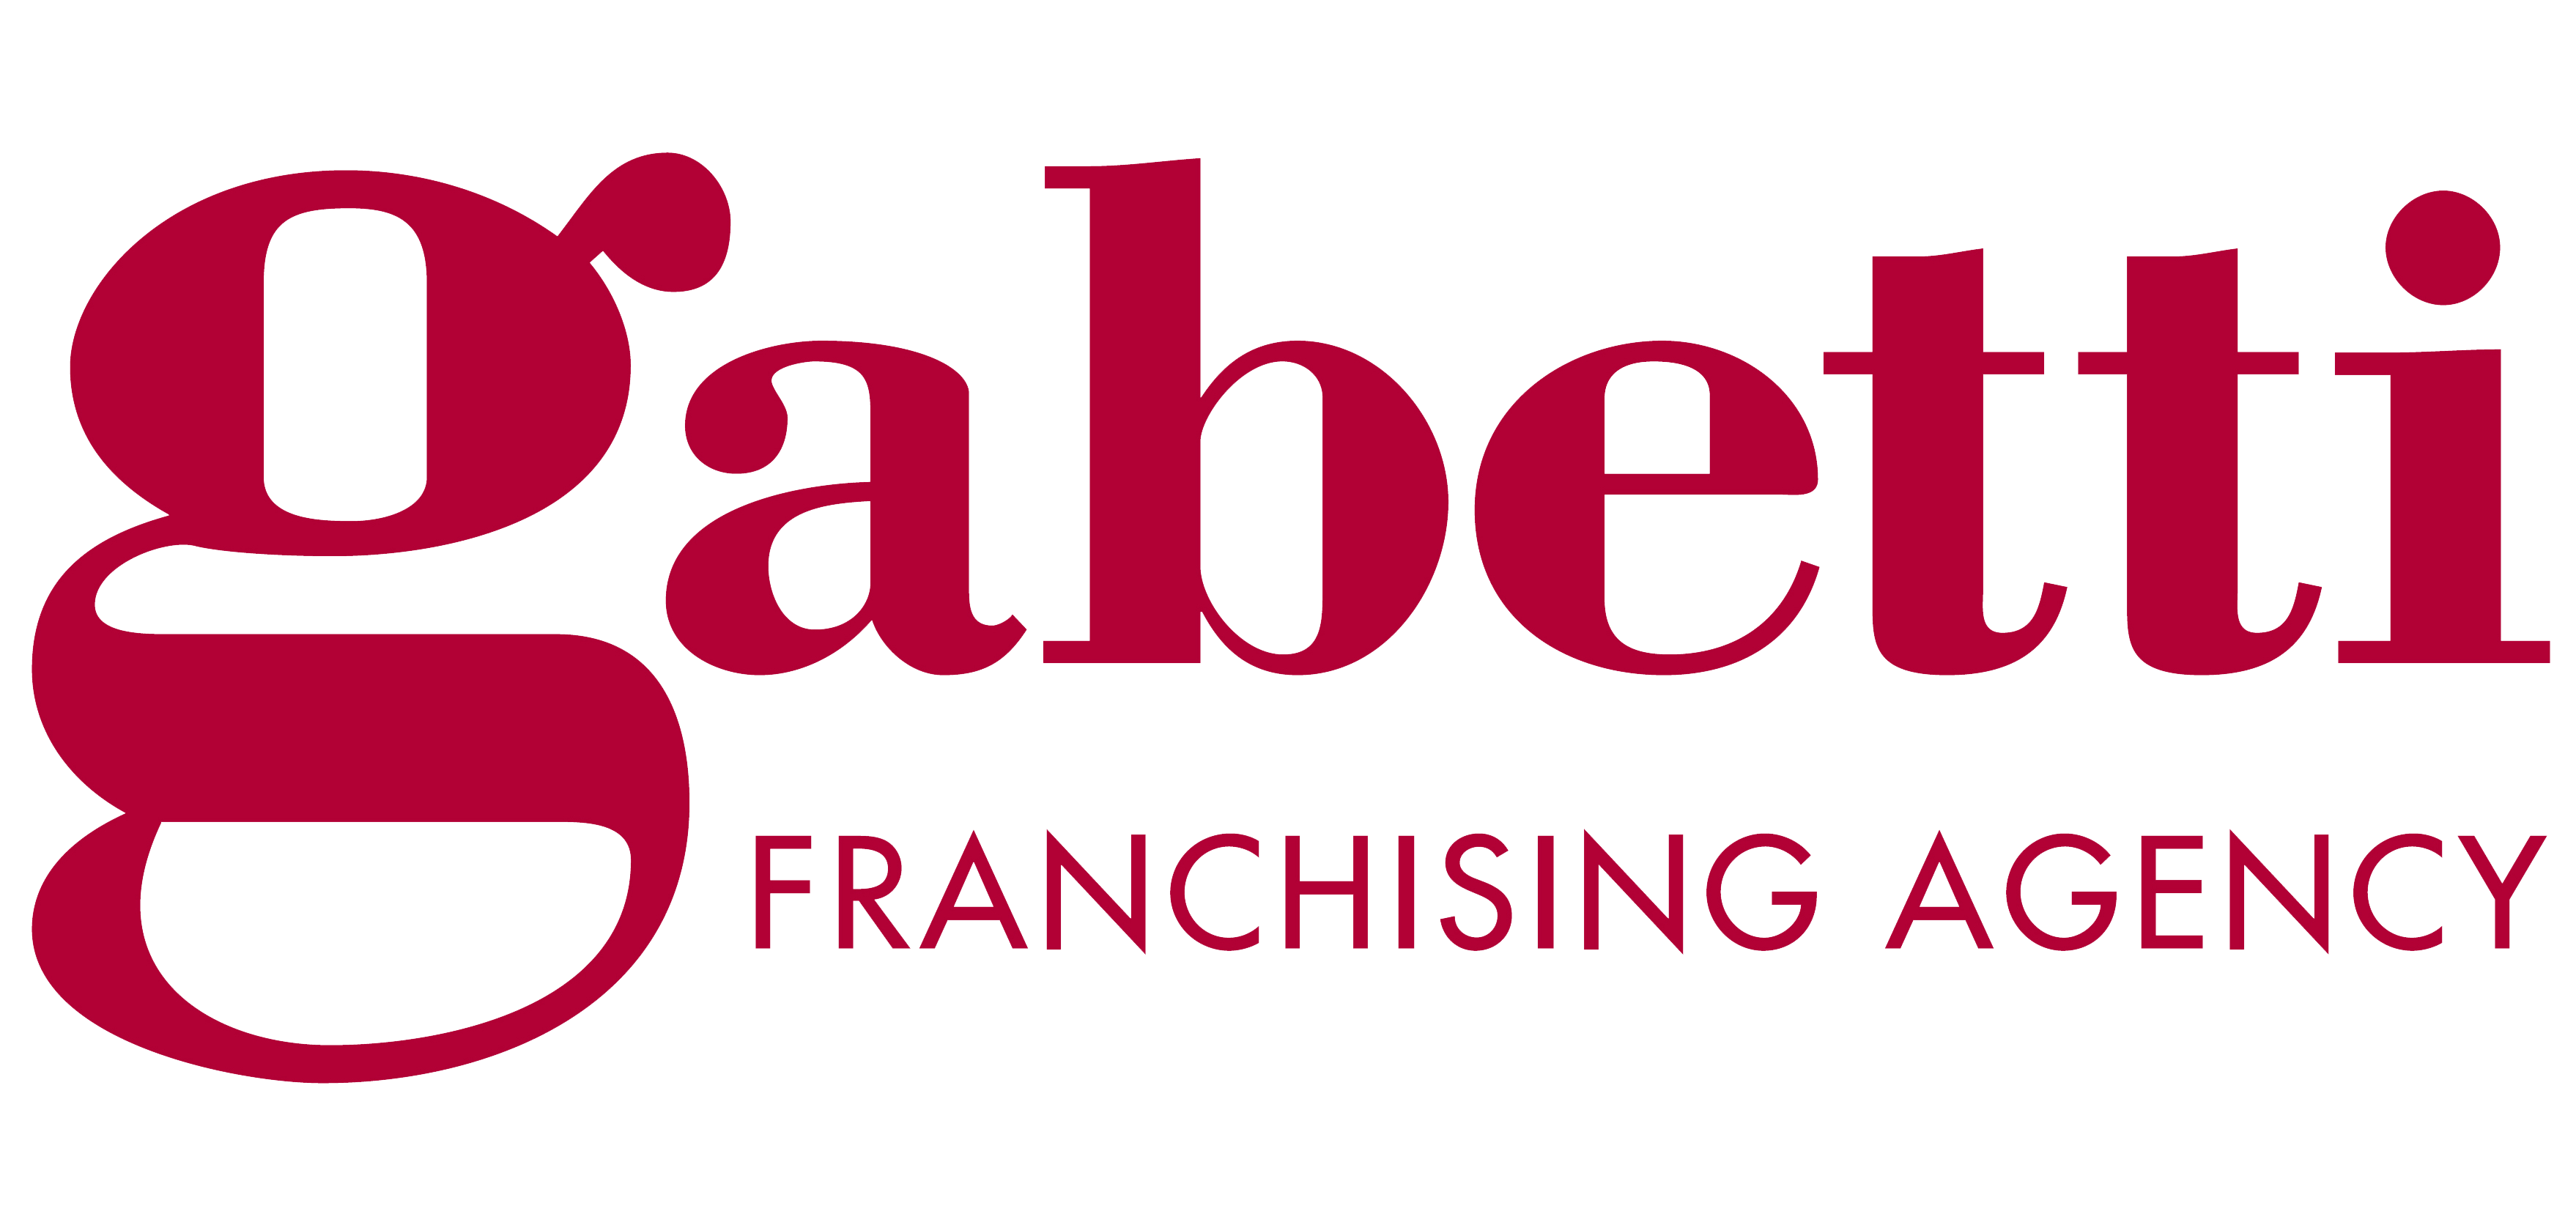 Posizioni Aperte - Gabetti Franchising Agency